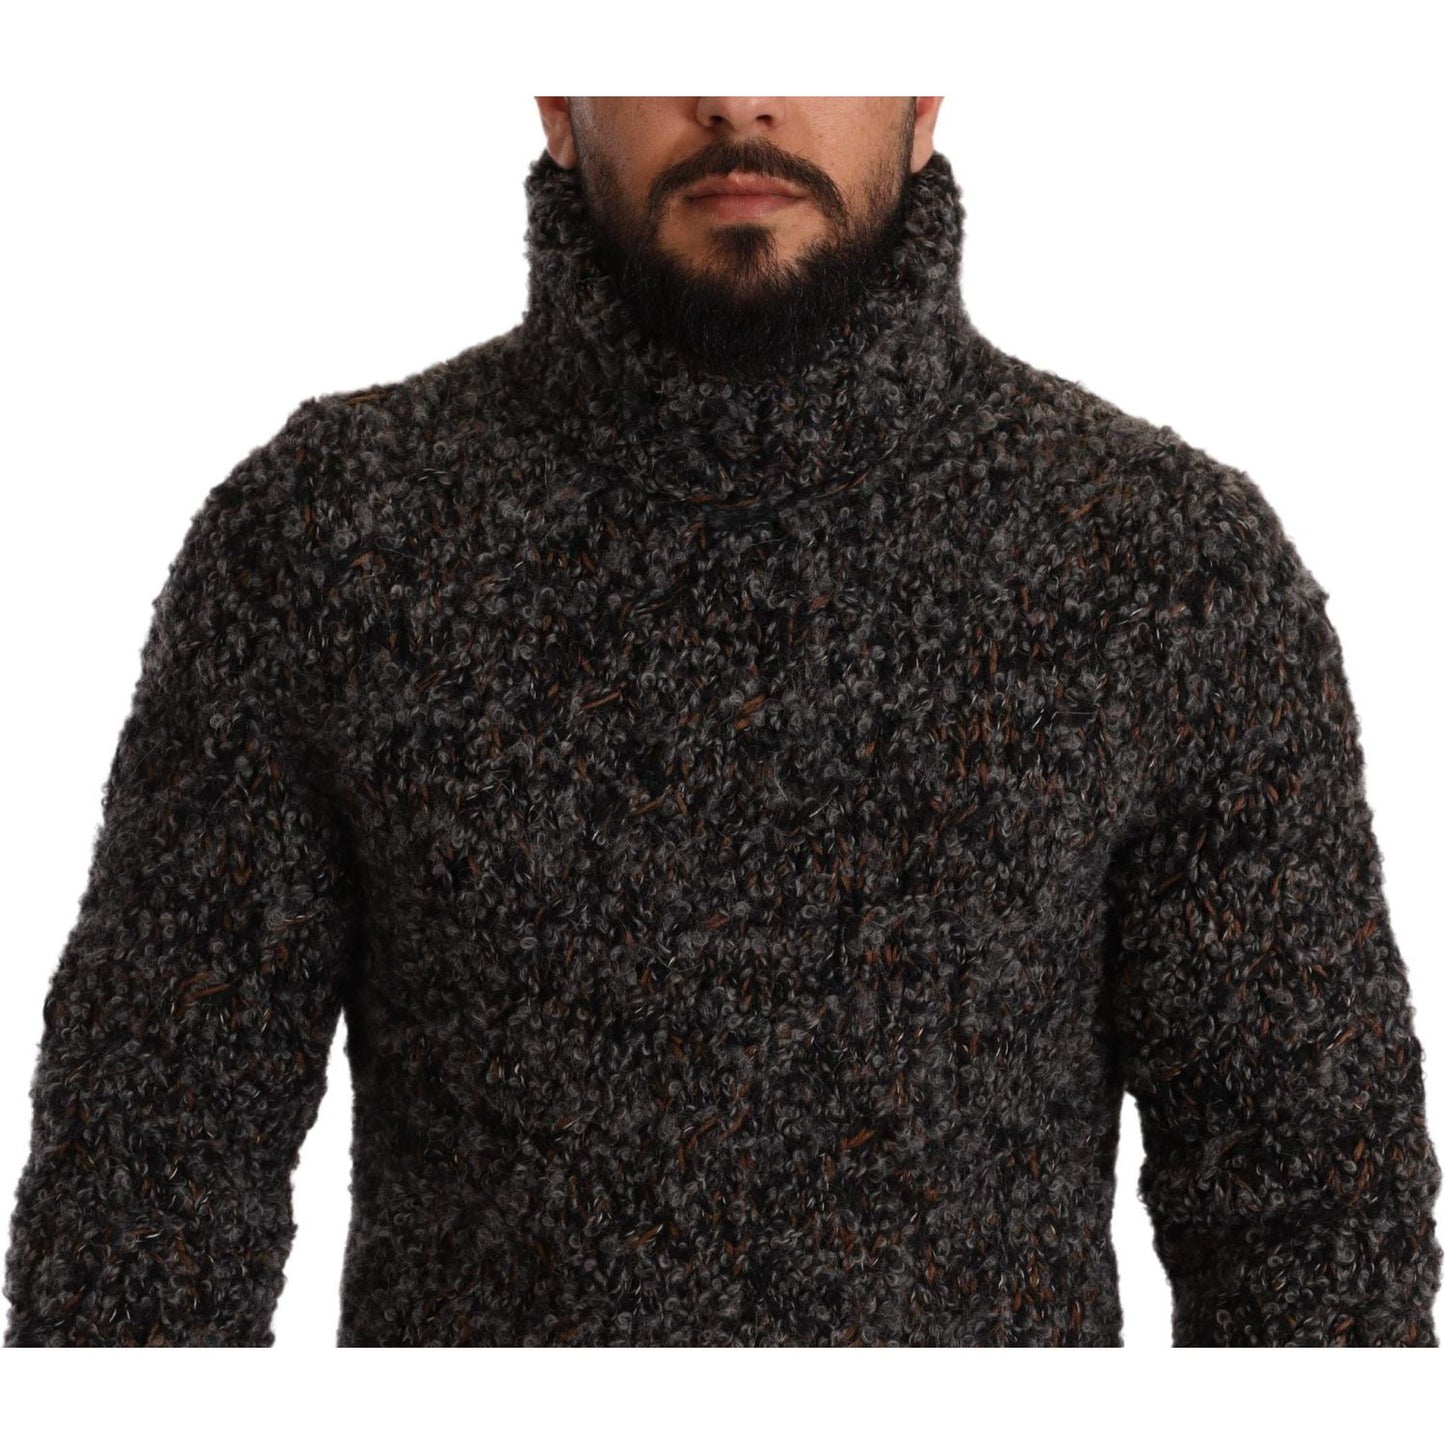 Dolce & Gabbana Elegant Speckled Turtleneck Wool-Blend Sweater MAN SWEATERS gray-wool-blend-turtleneck-pullover-sweater IMG_4850-scaled-6bb3f01b-1b3.jpg